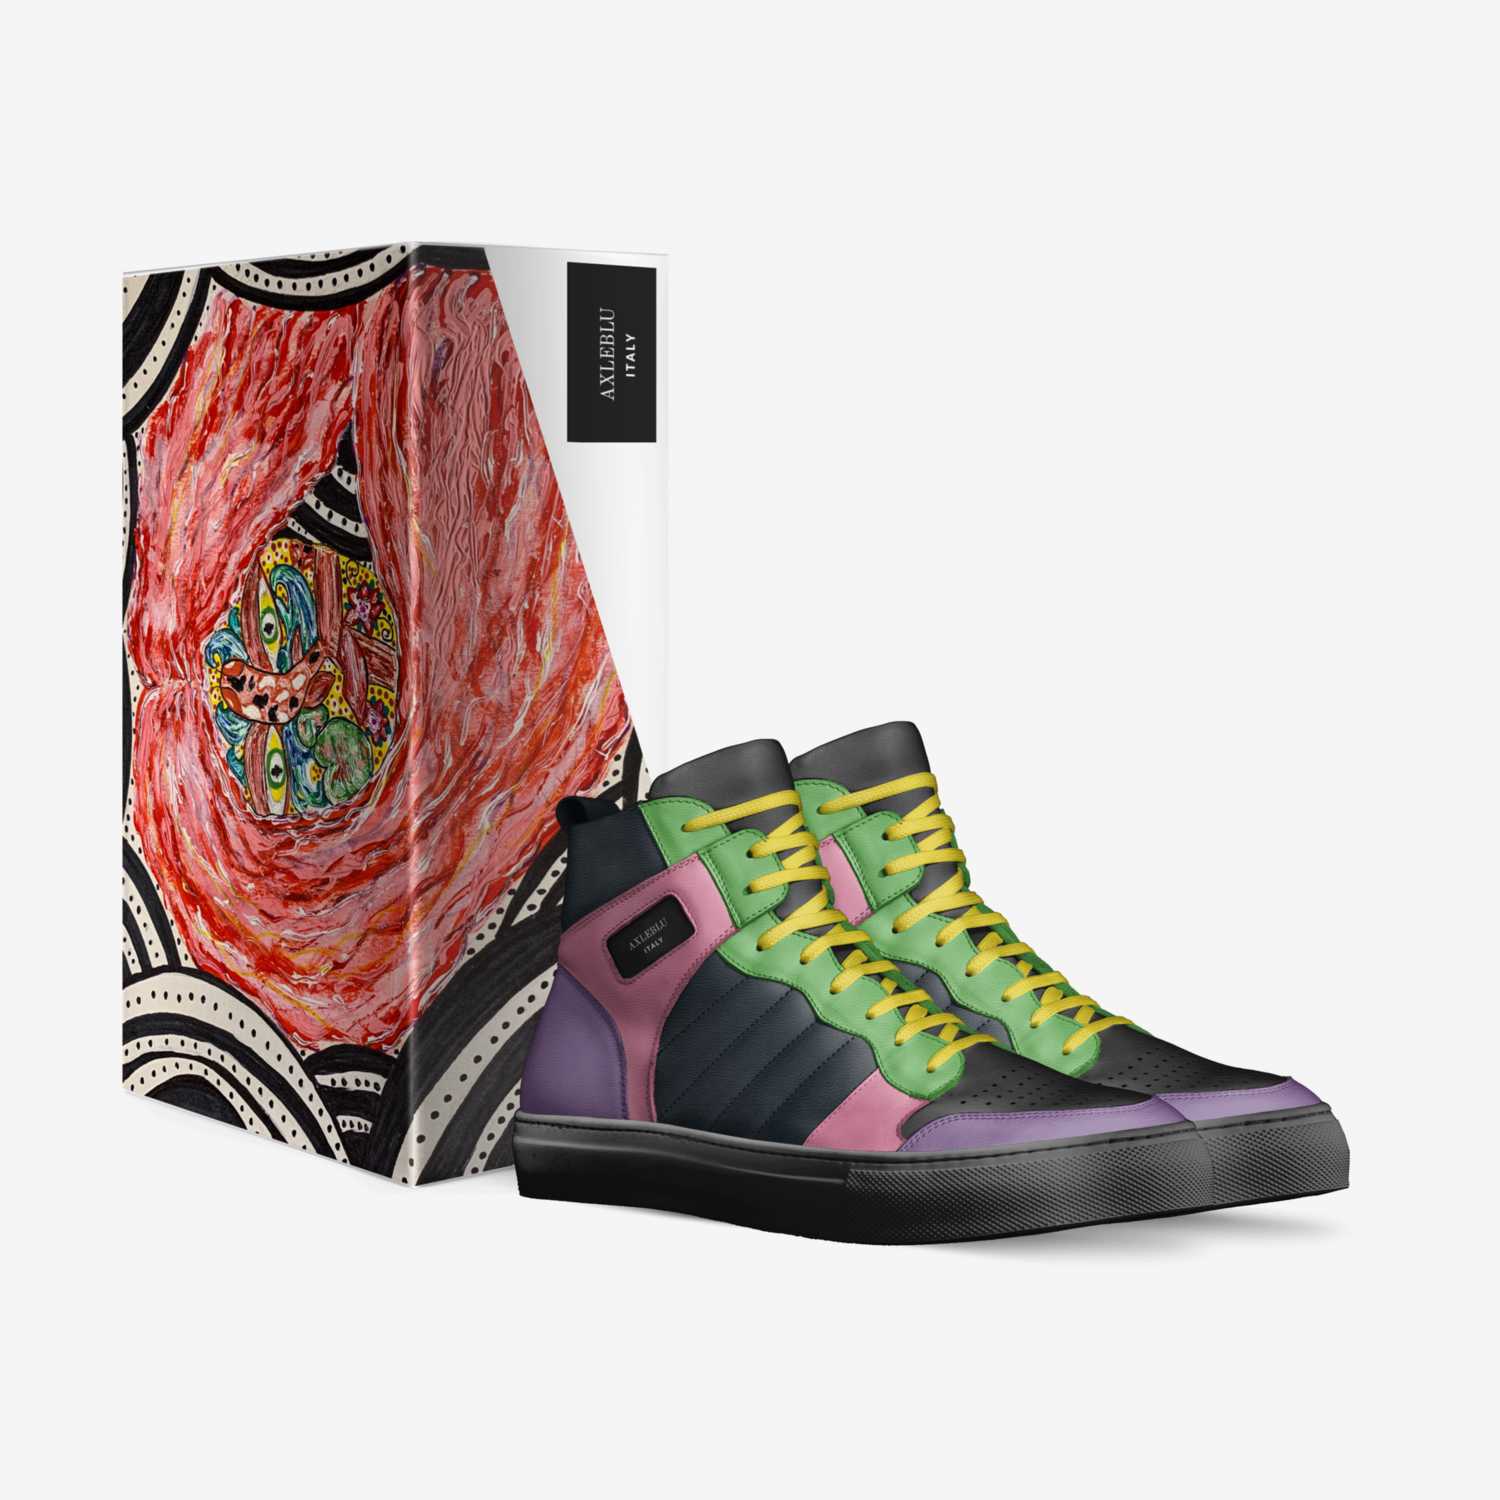 JOLENE custom made in Italy shoes by Shiela Torino | Box view